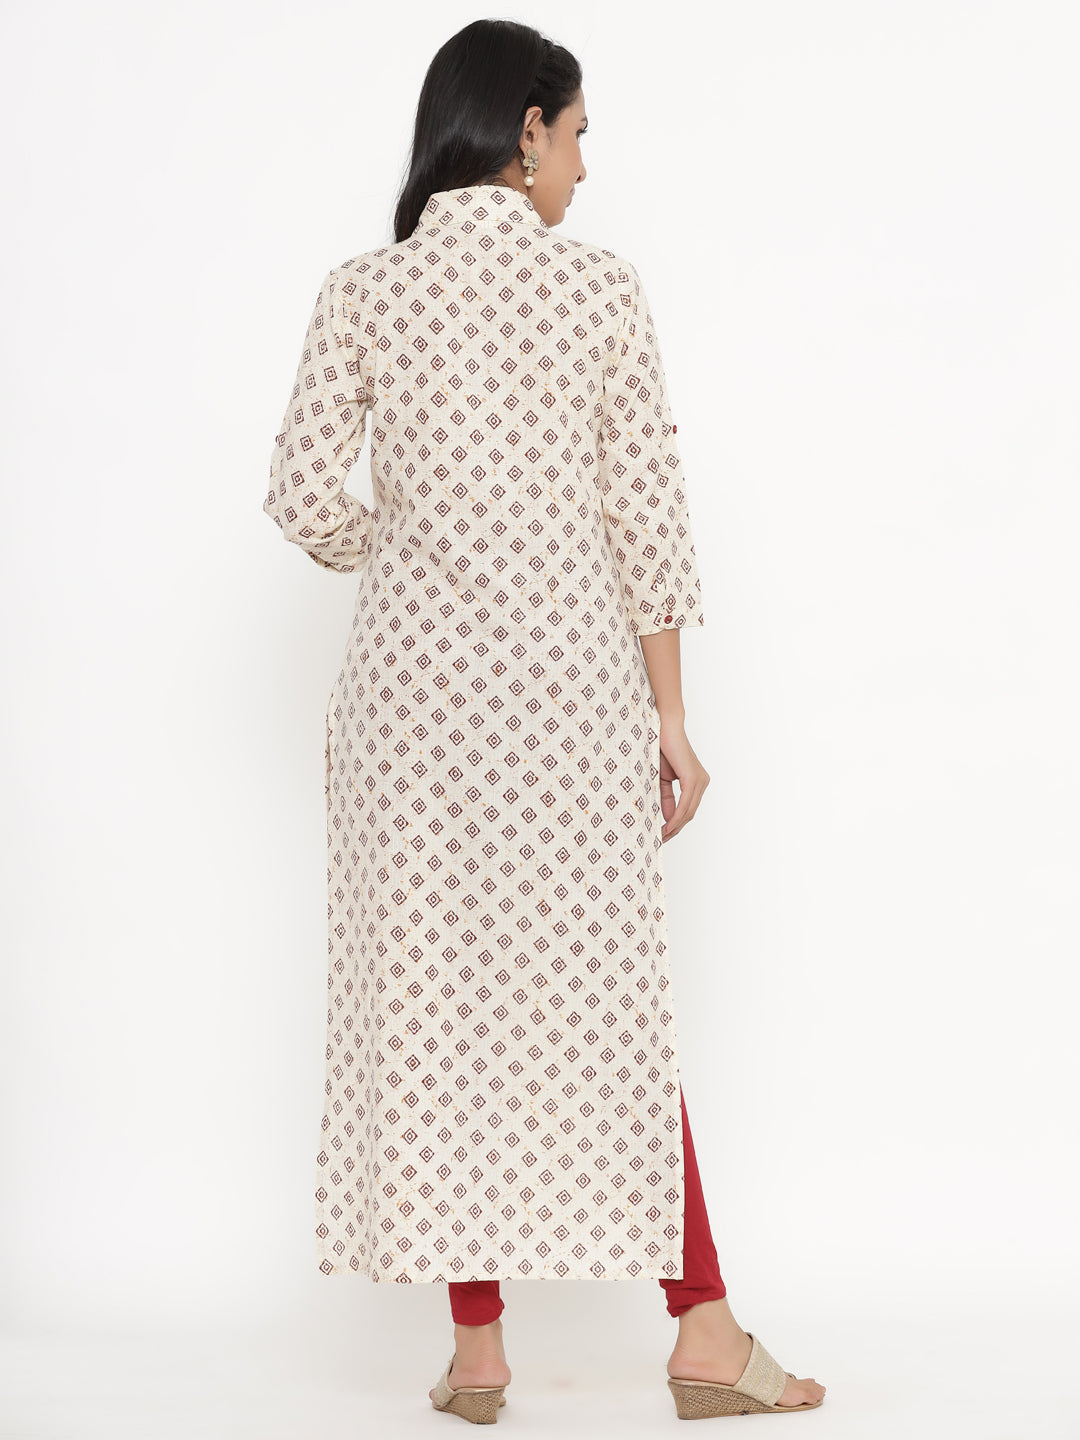 Women's Self Desgin Cotton Fabric A-Line Kurta Off-White Color - Kipek